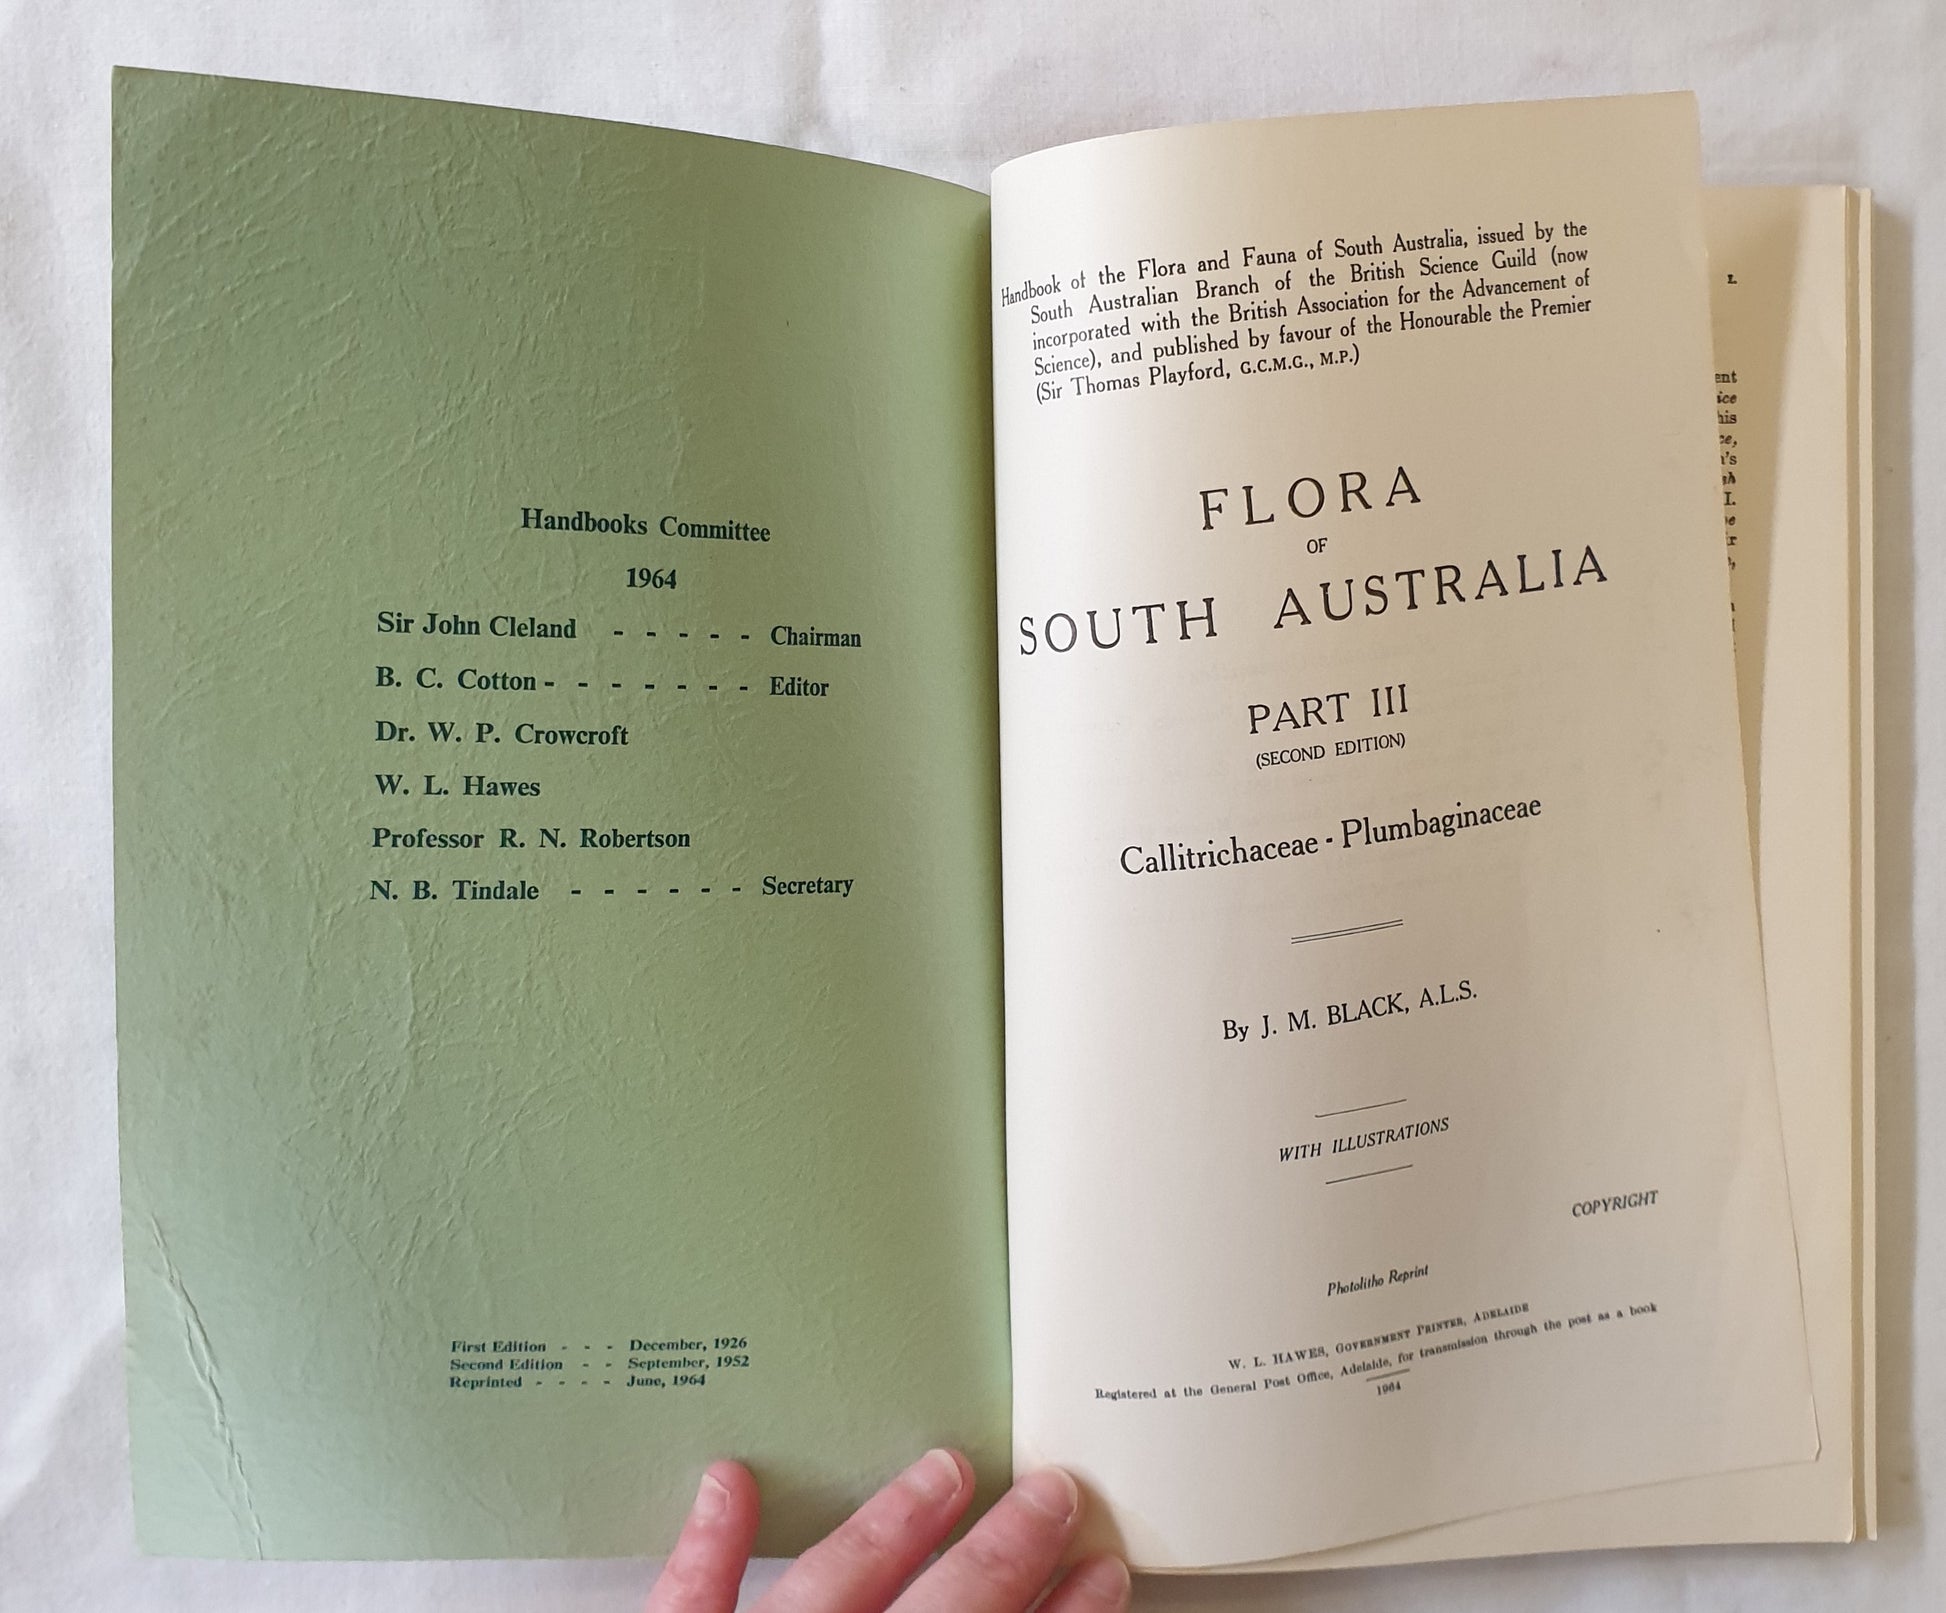 Flora of South Australia by J. M. Black Part III (Second Edition) Reprinted June 1964 Callitrichaceae - Plumbaginaceae.”